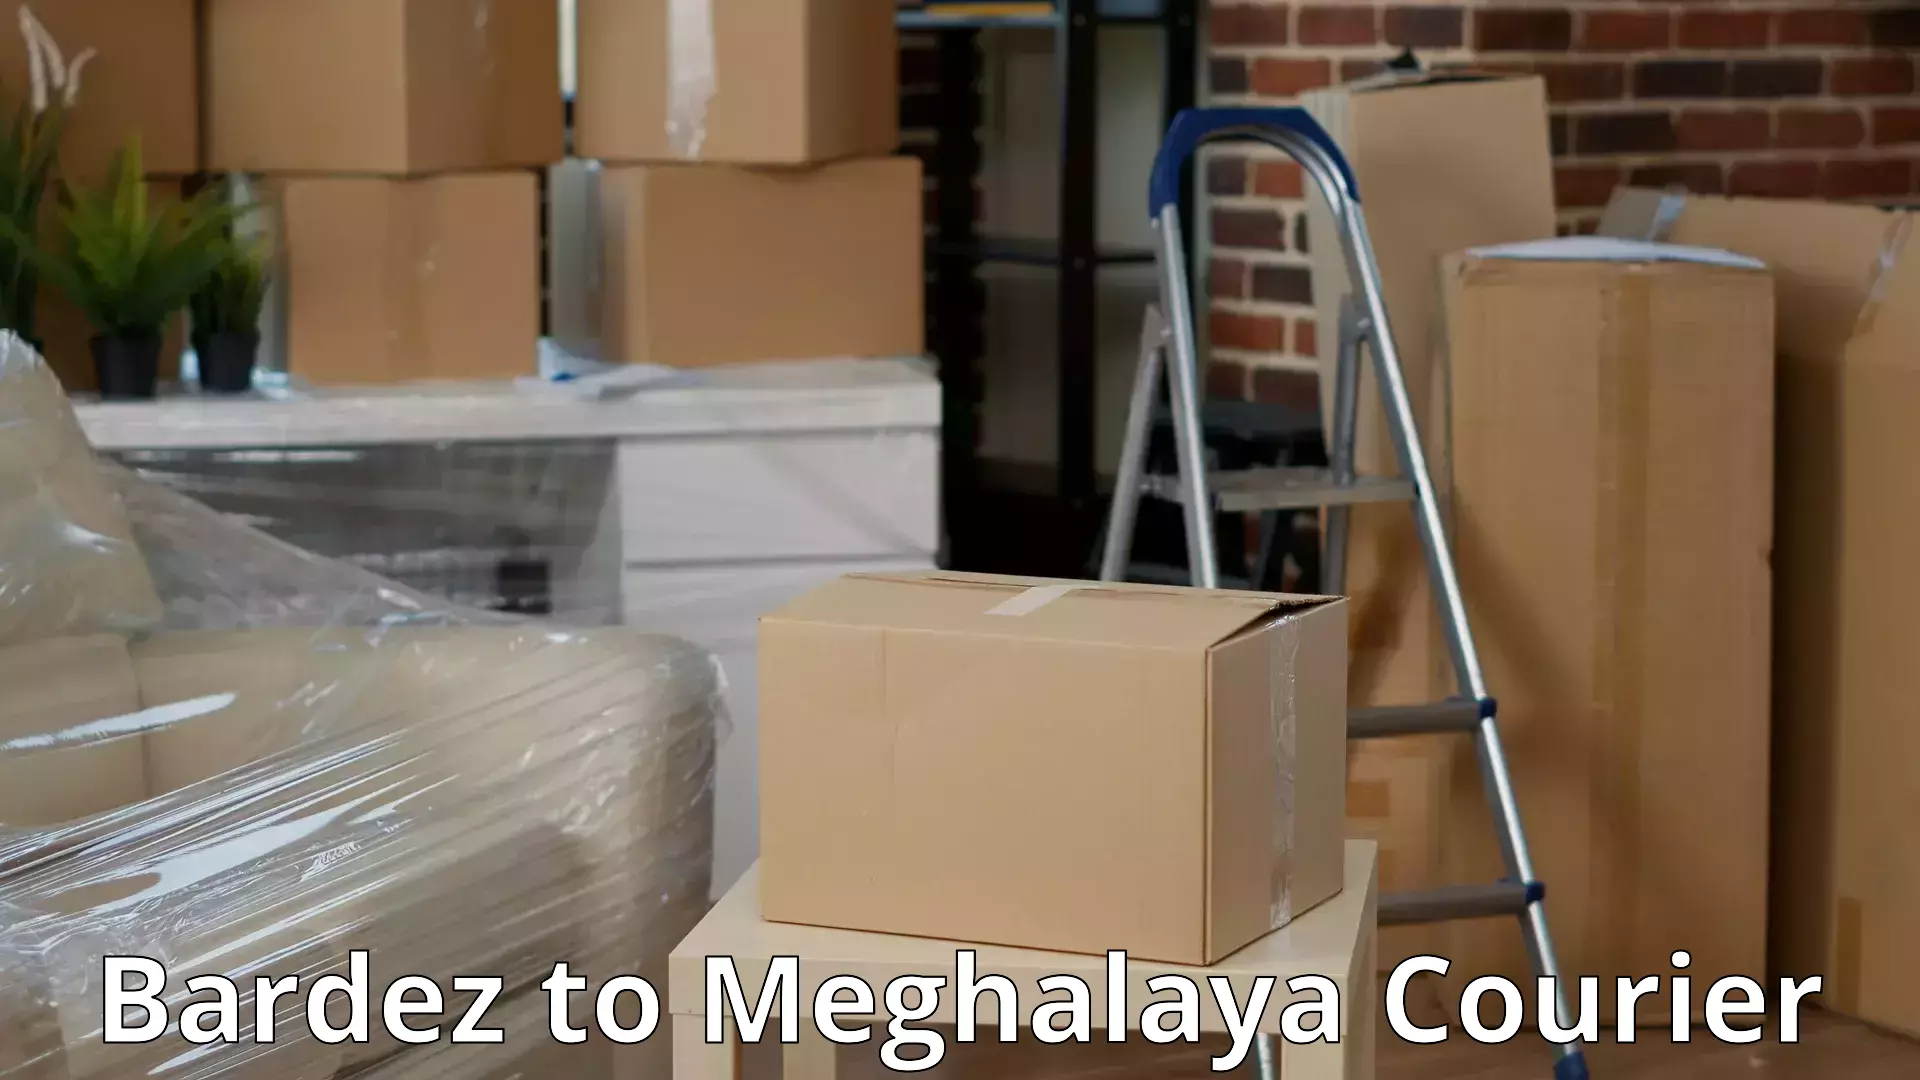 Furniture moving specialists Bardez to Meghalaya